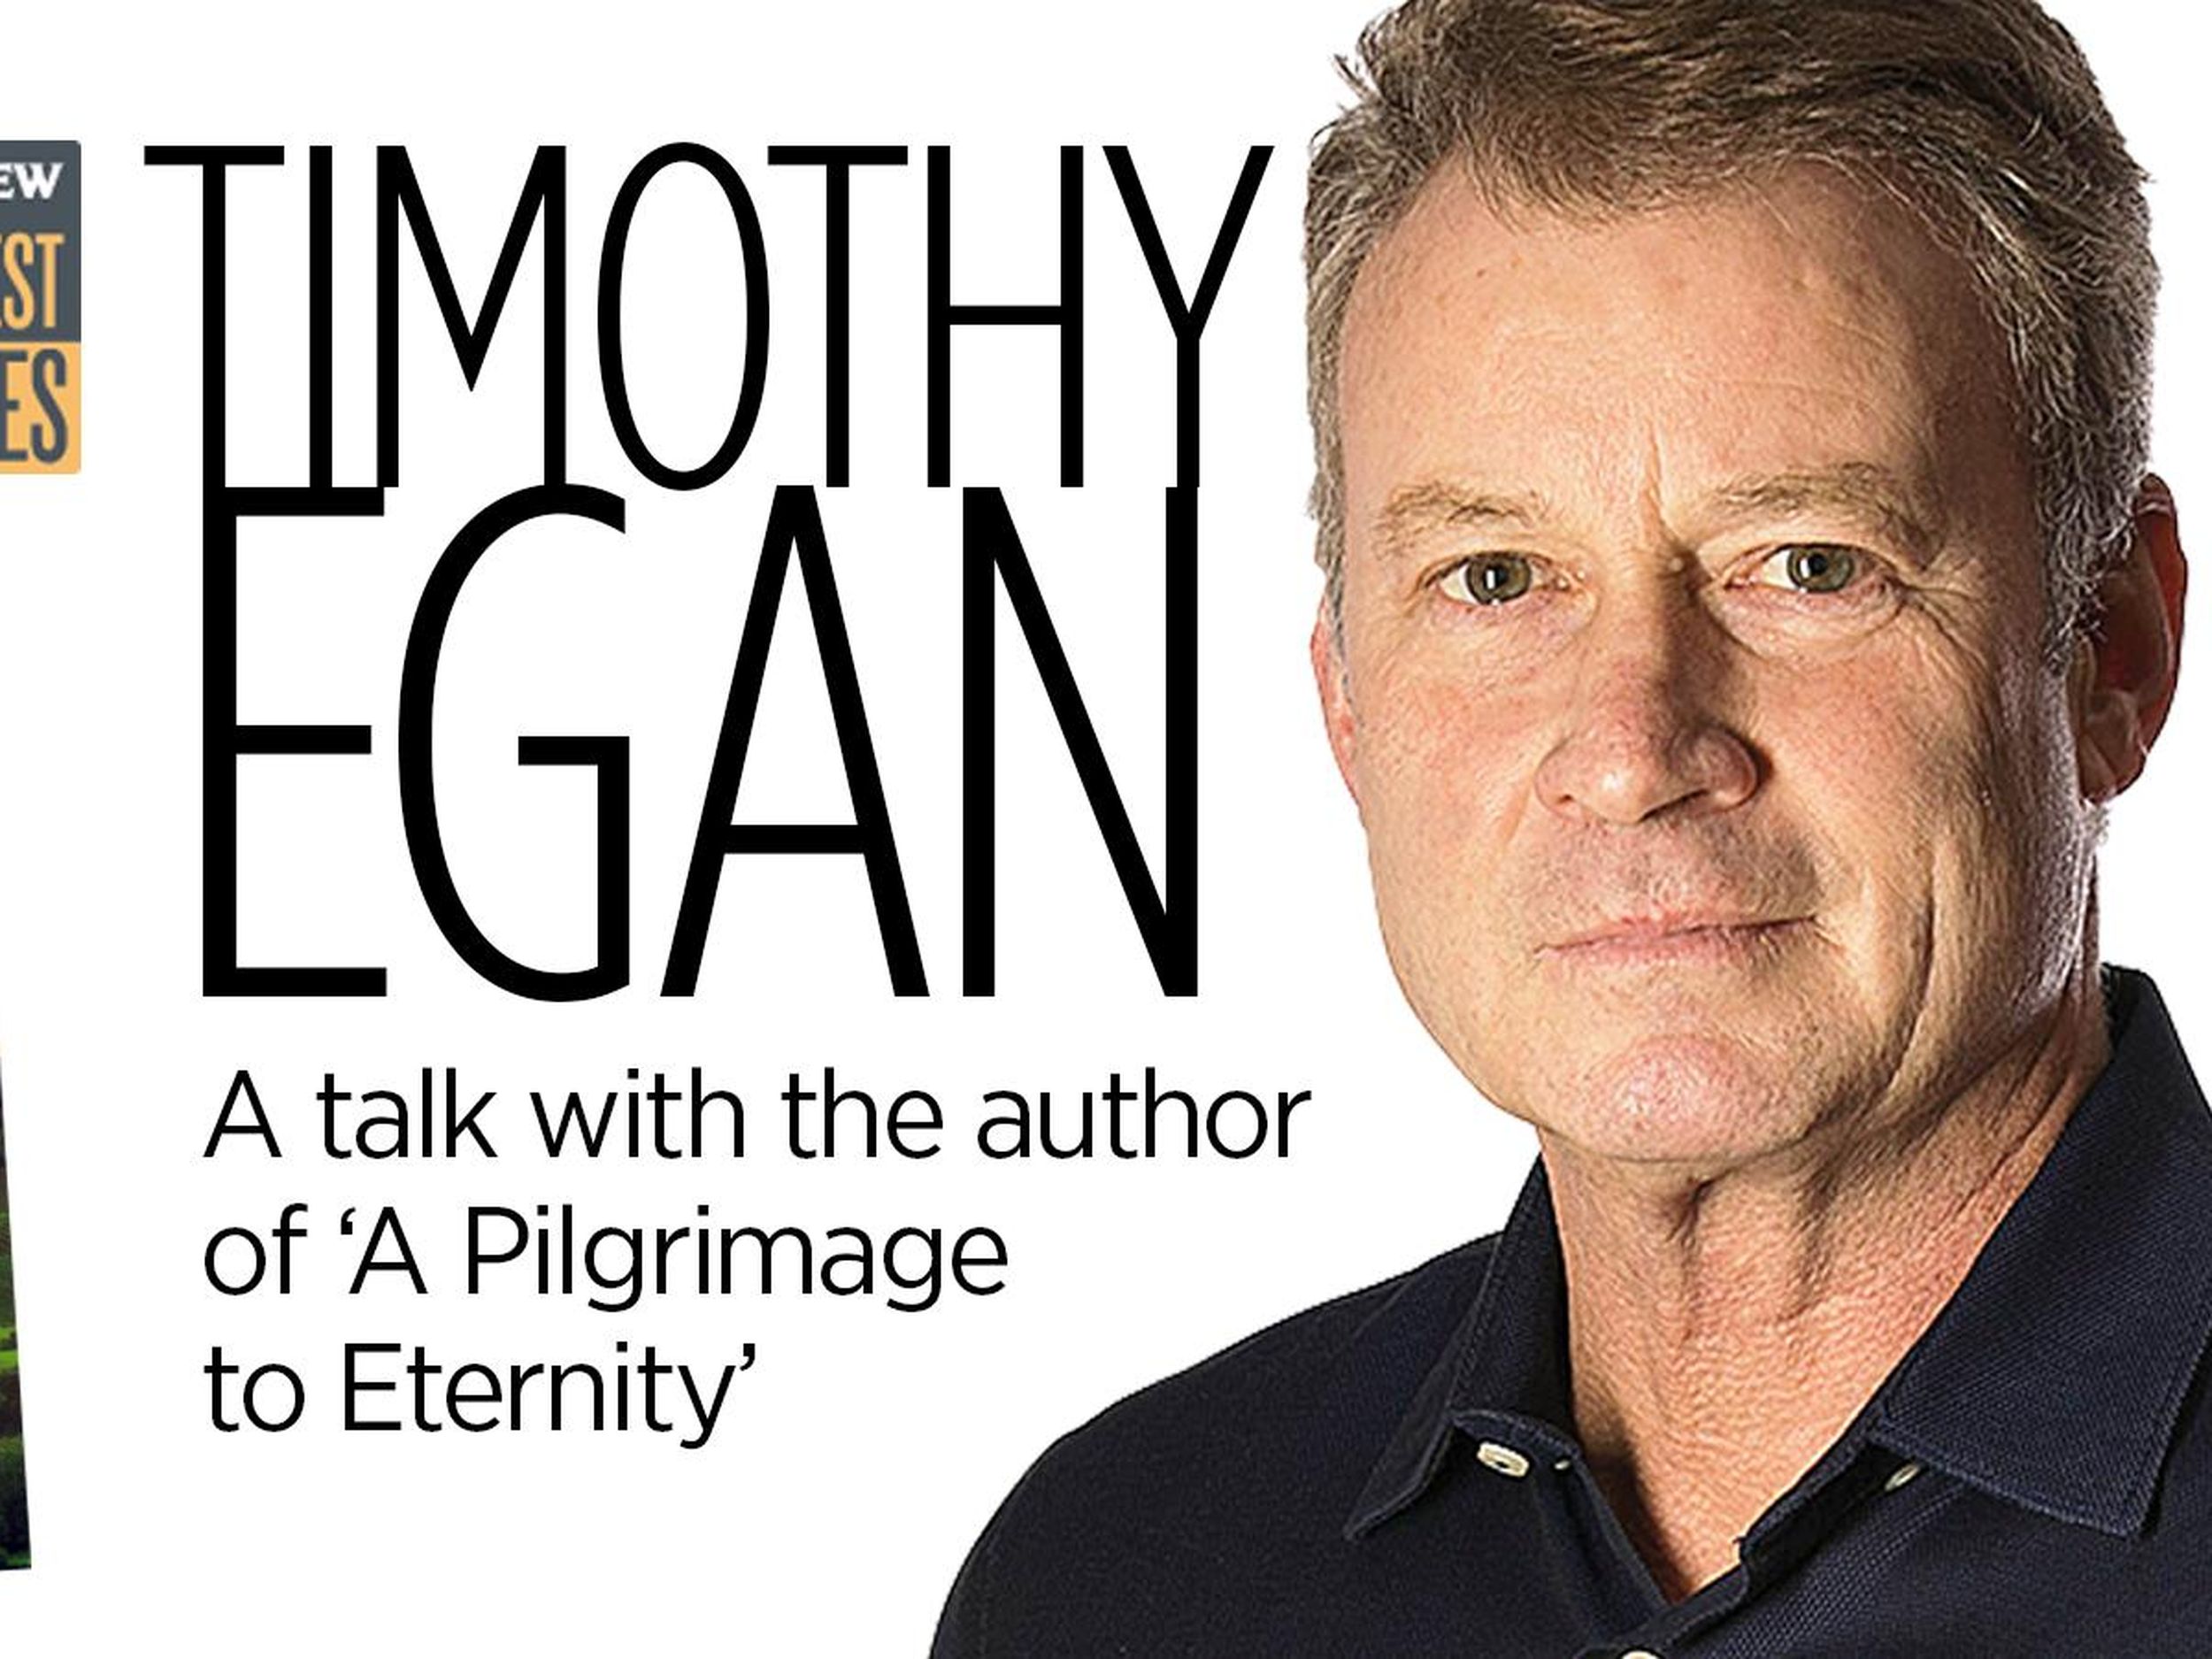 Award-winning author Timothy Egan to speak Oct. 19 at Friends of